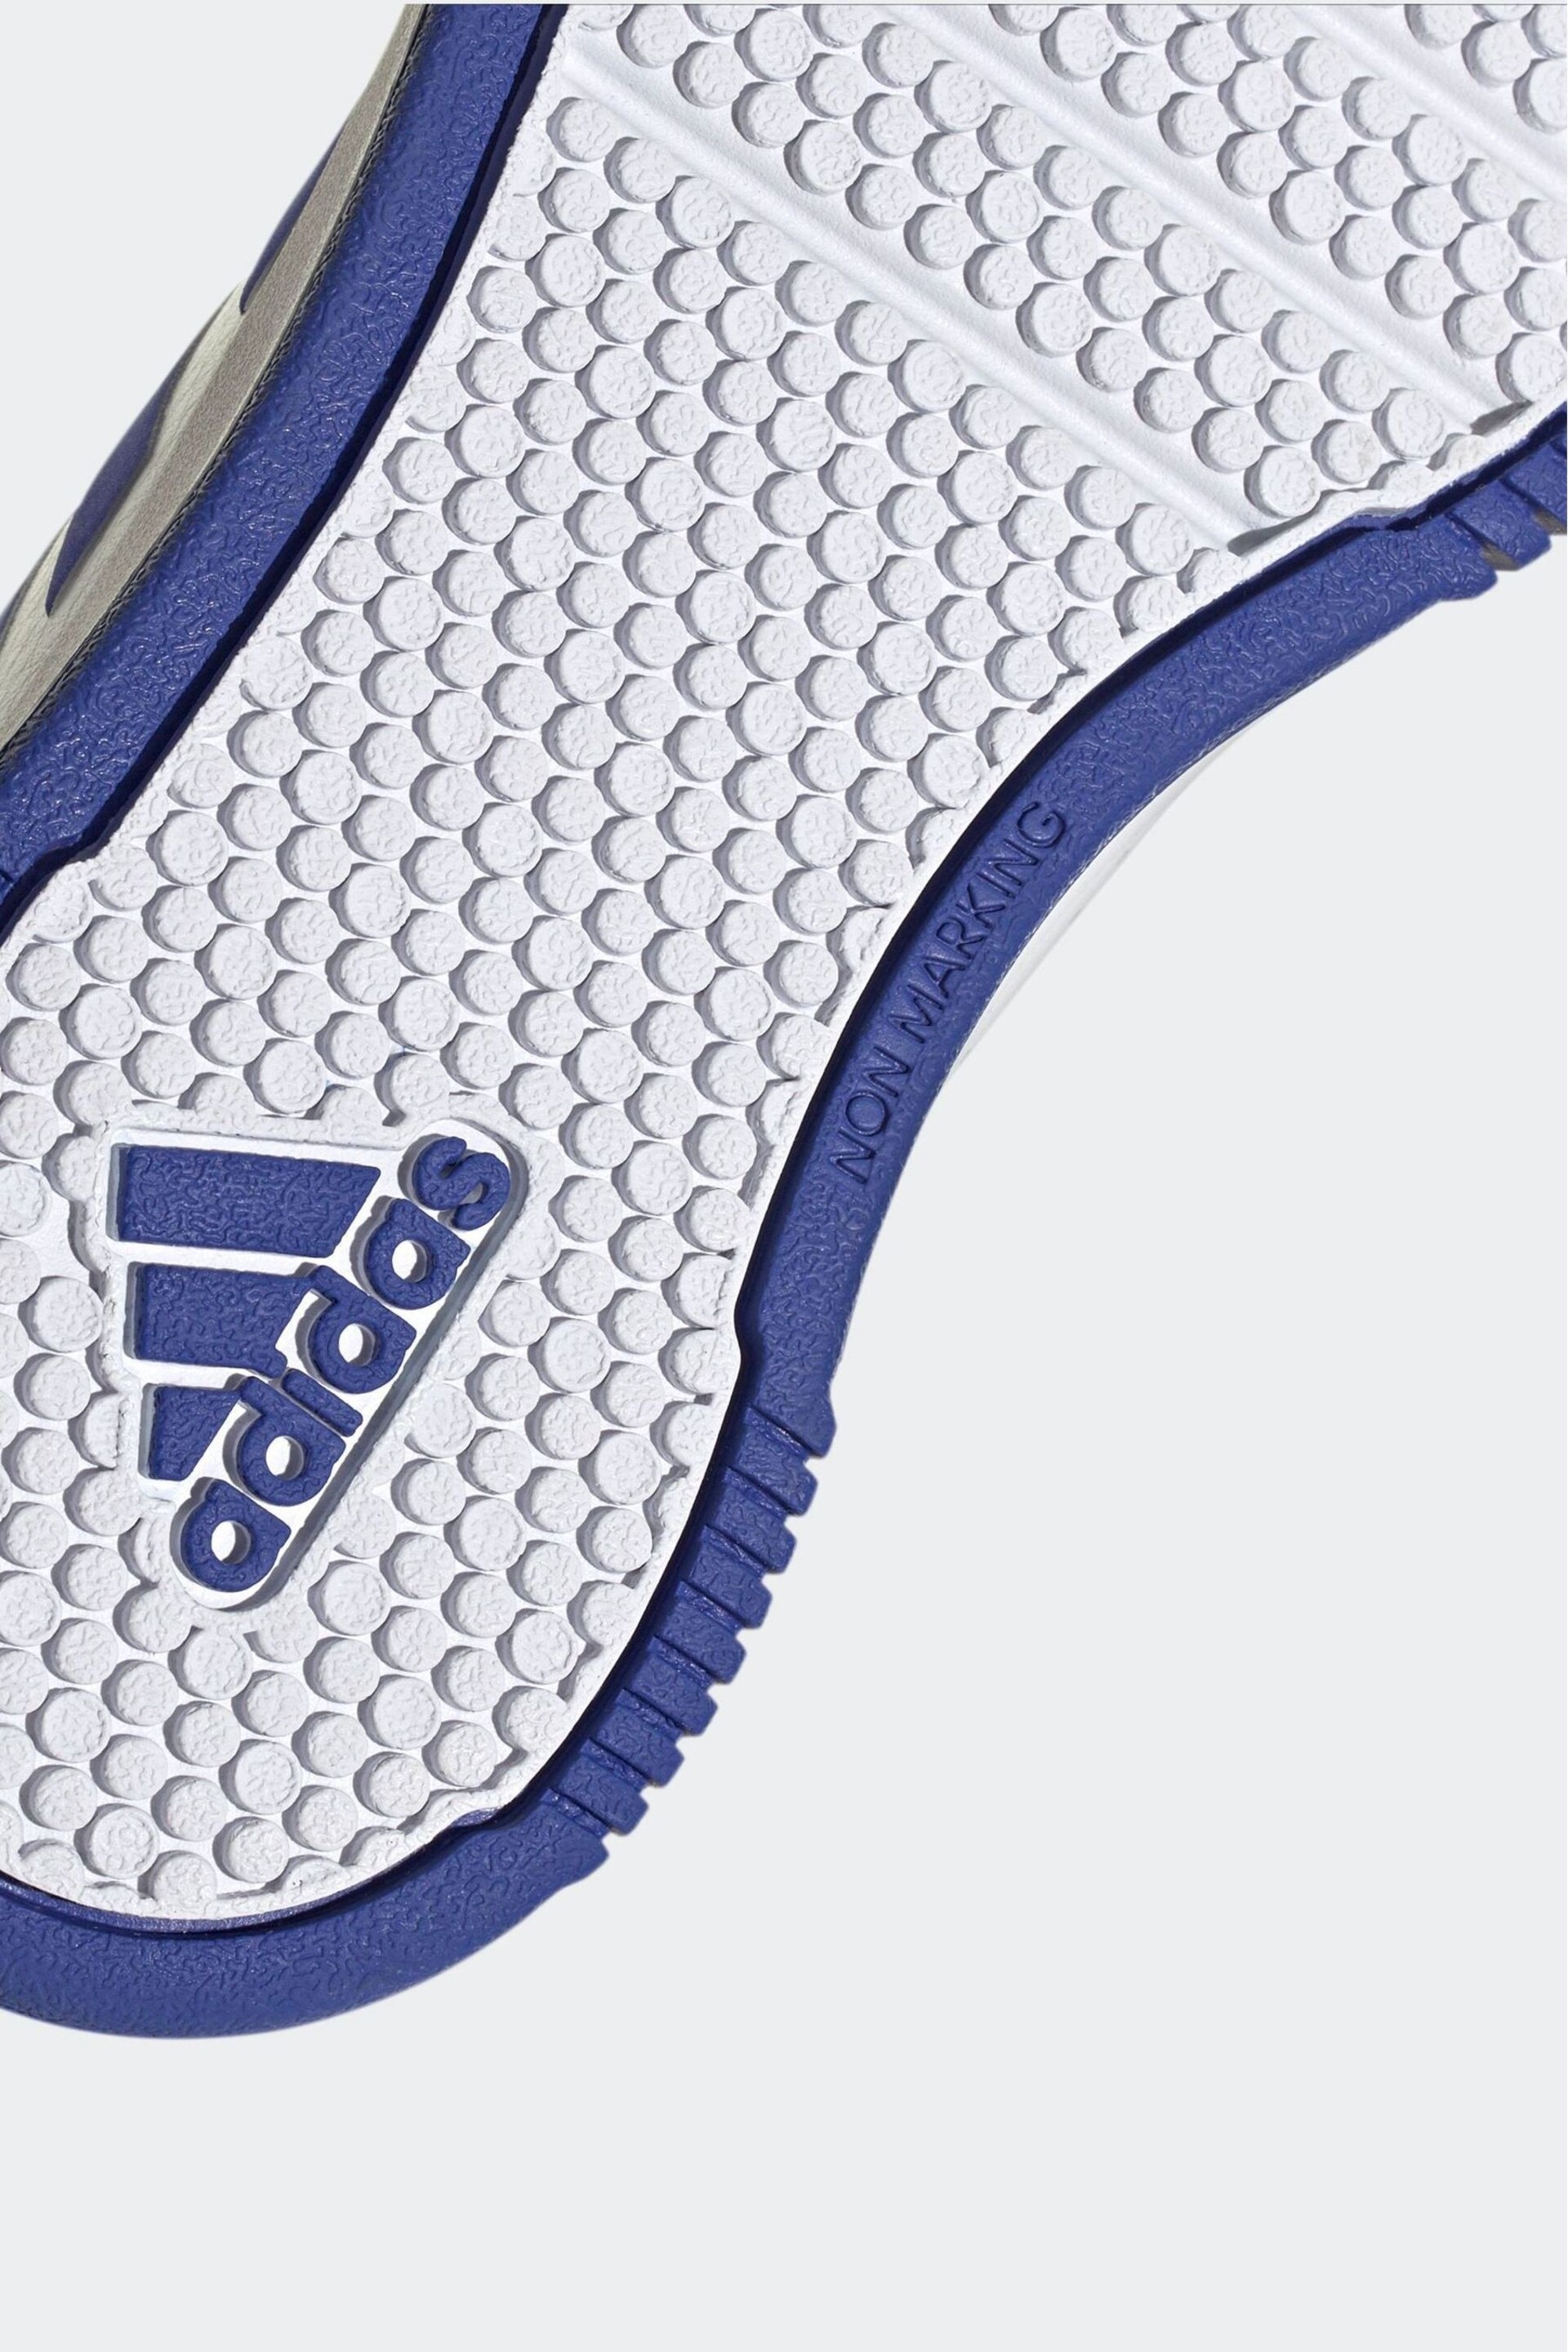 adidas White/Blue Tensaur Sport Training Lace Shoes - Image 5 of 8